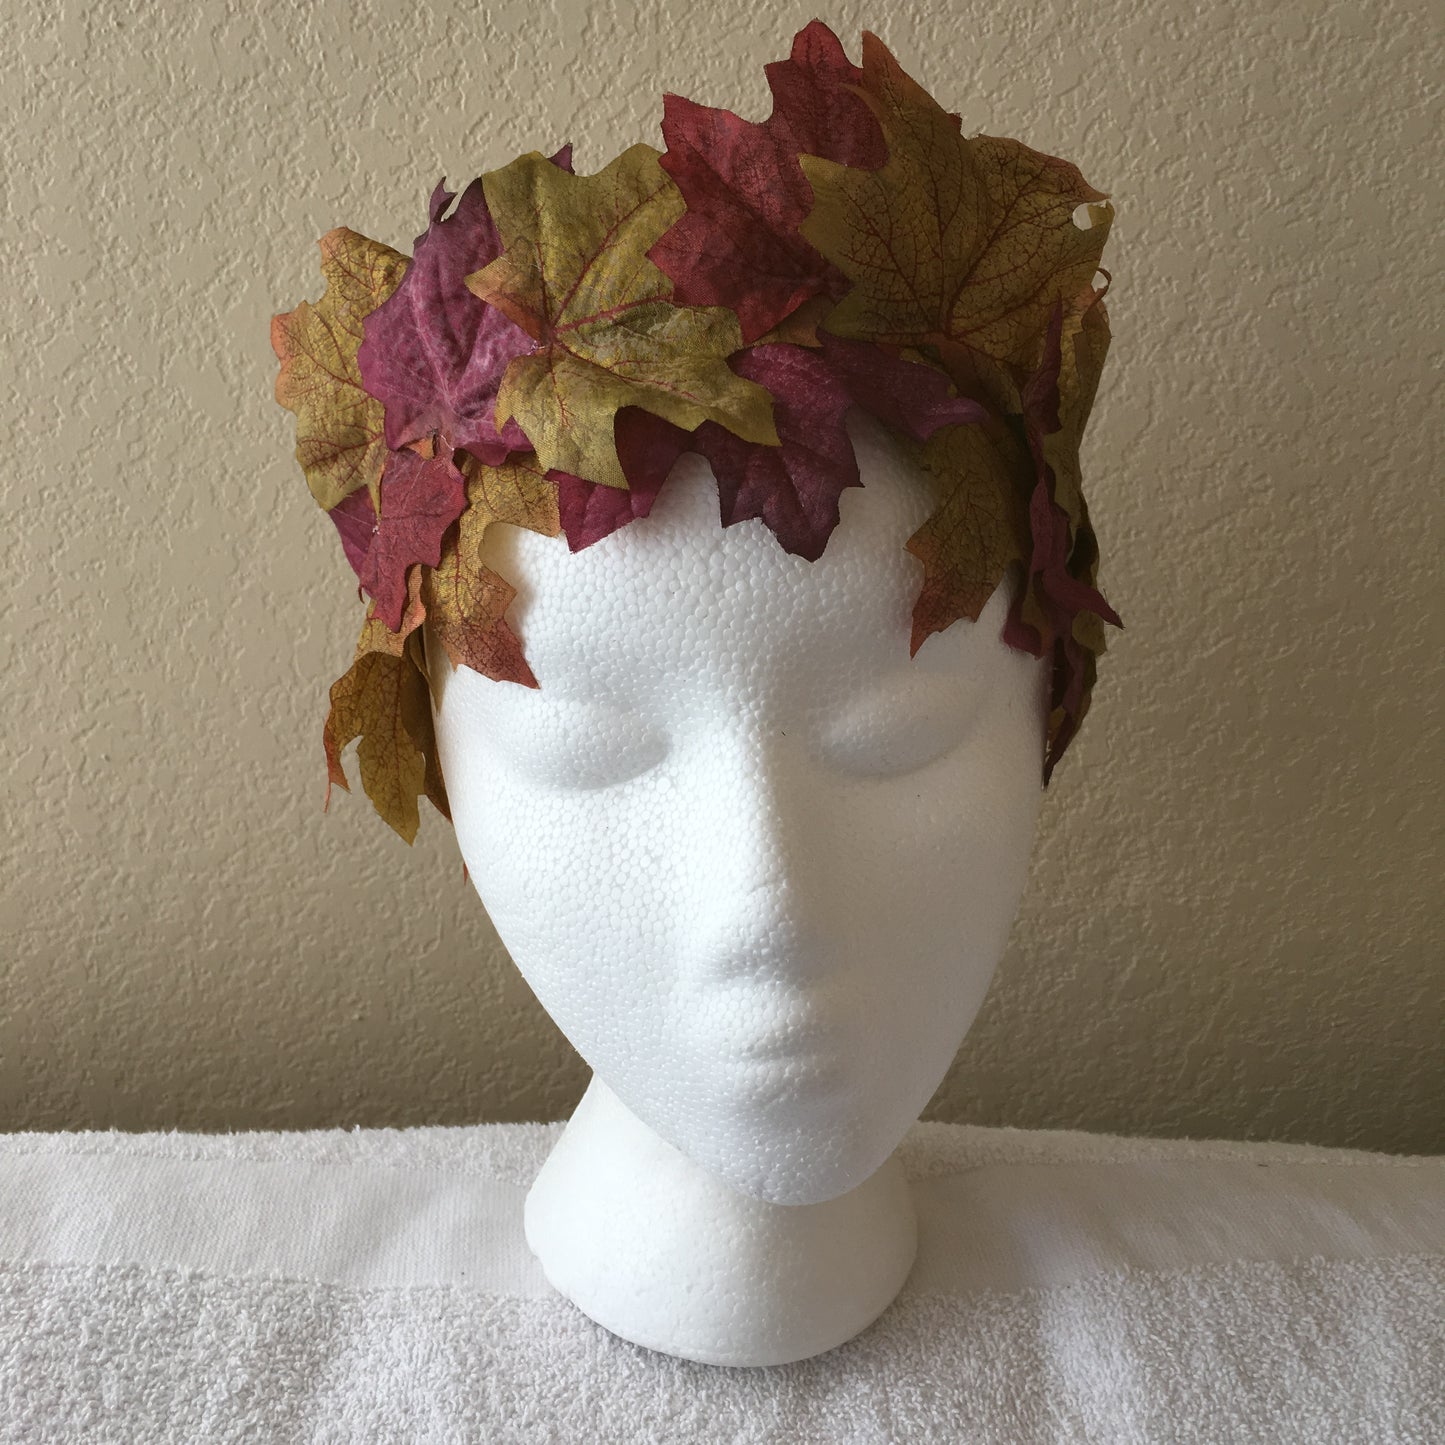 All-Leaf Wreath - Beige & wine crown